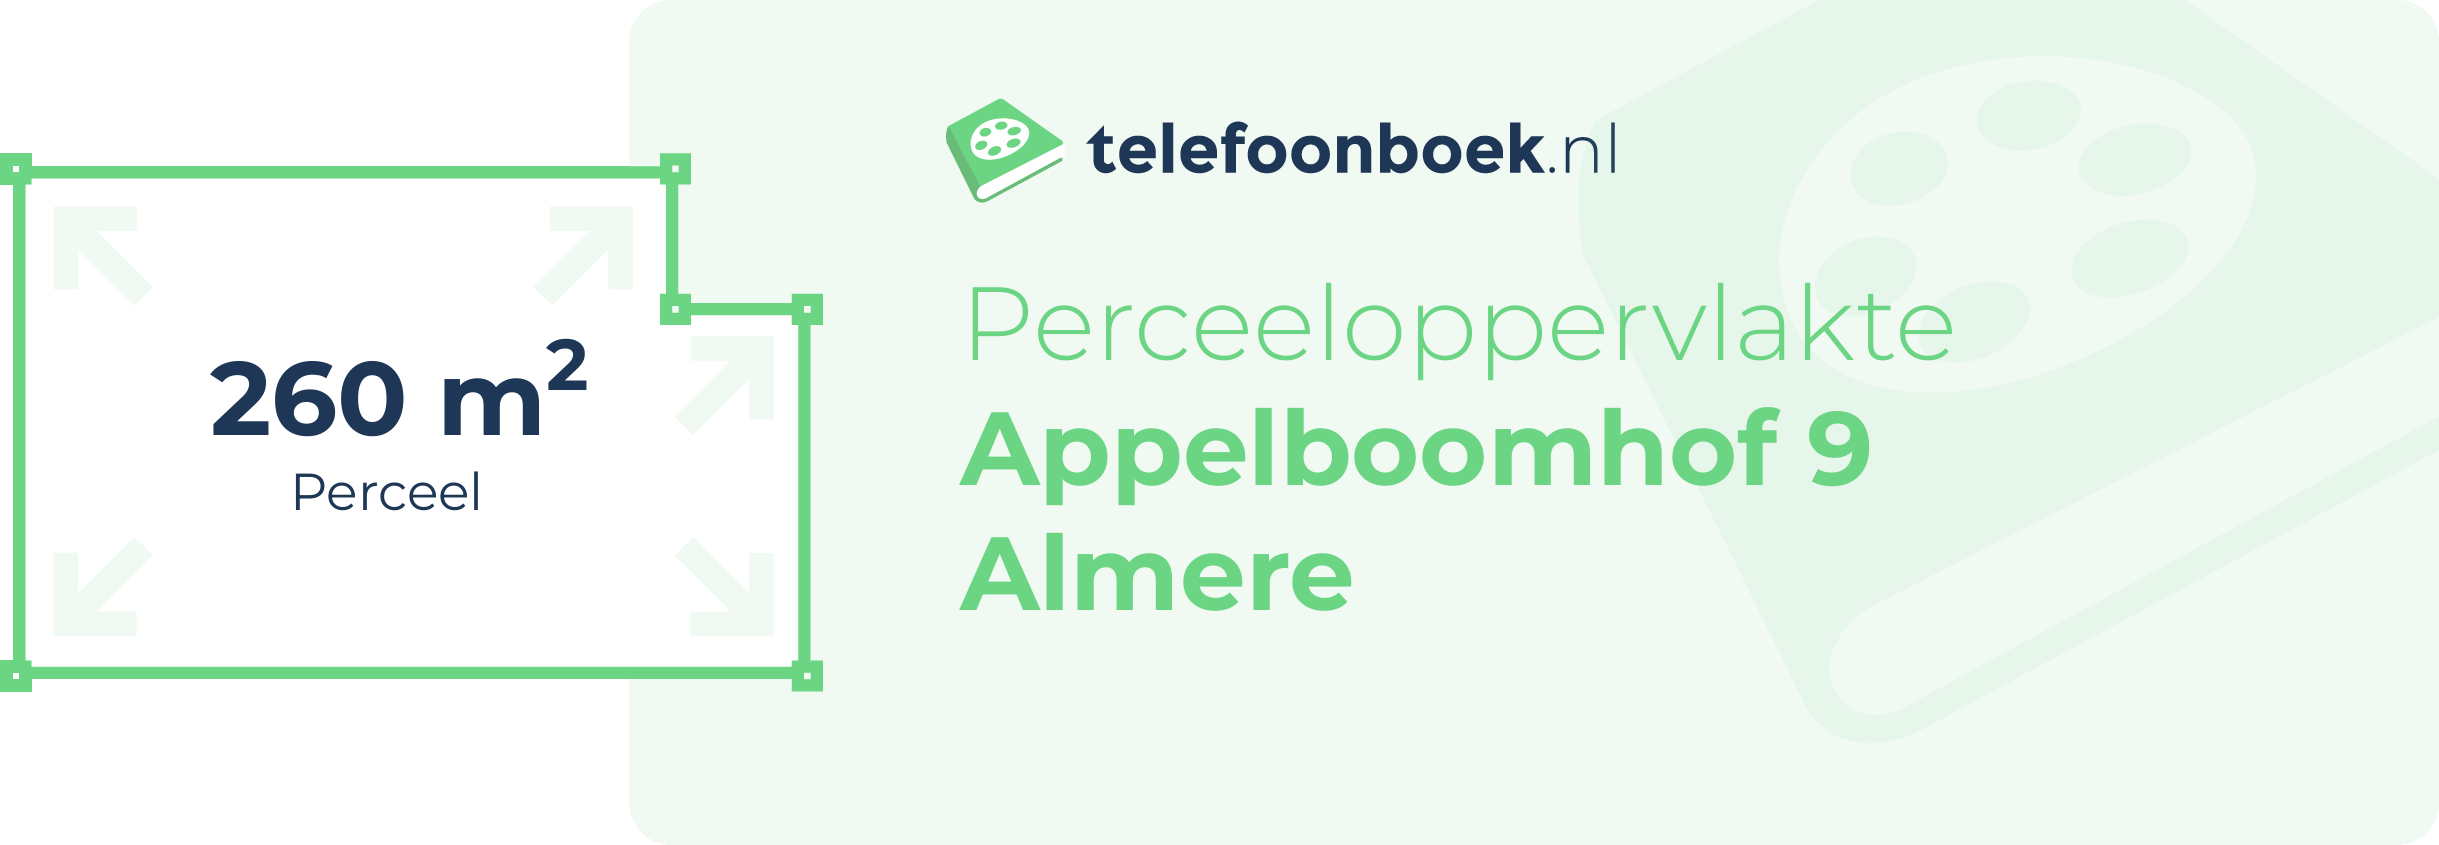 Perceeloppervlakte Appelboomhof 9 Almere